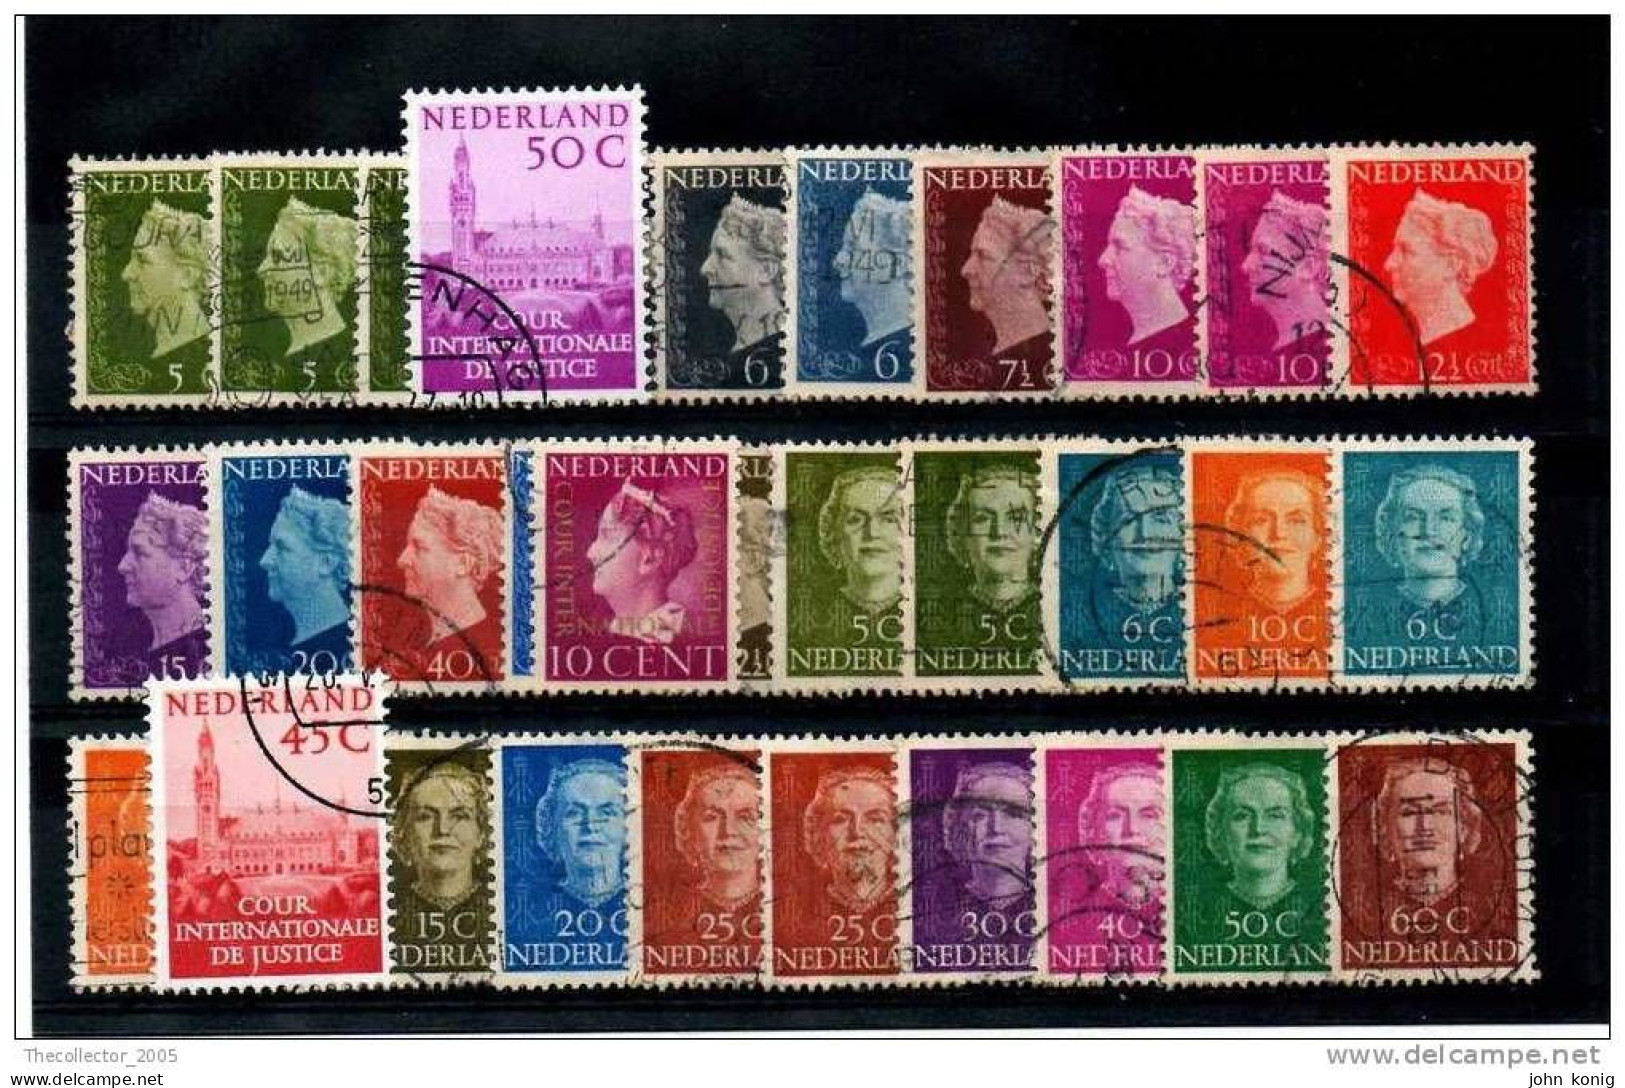 OLANDA - PAESI BASSI - HOLLAND - NEDERLAND - Lotto Francobolli - Stamps Lot - Colecciones Completas